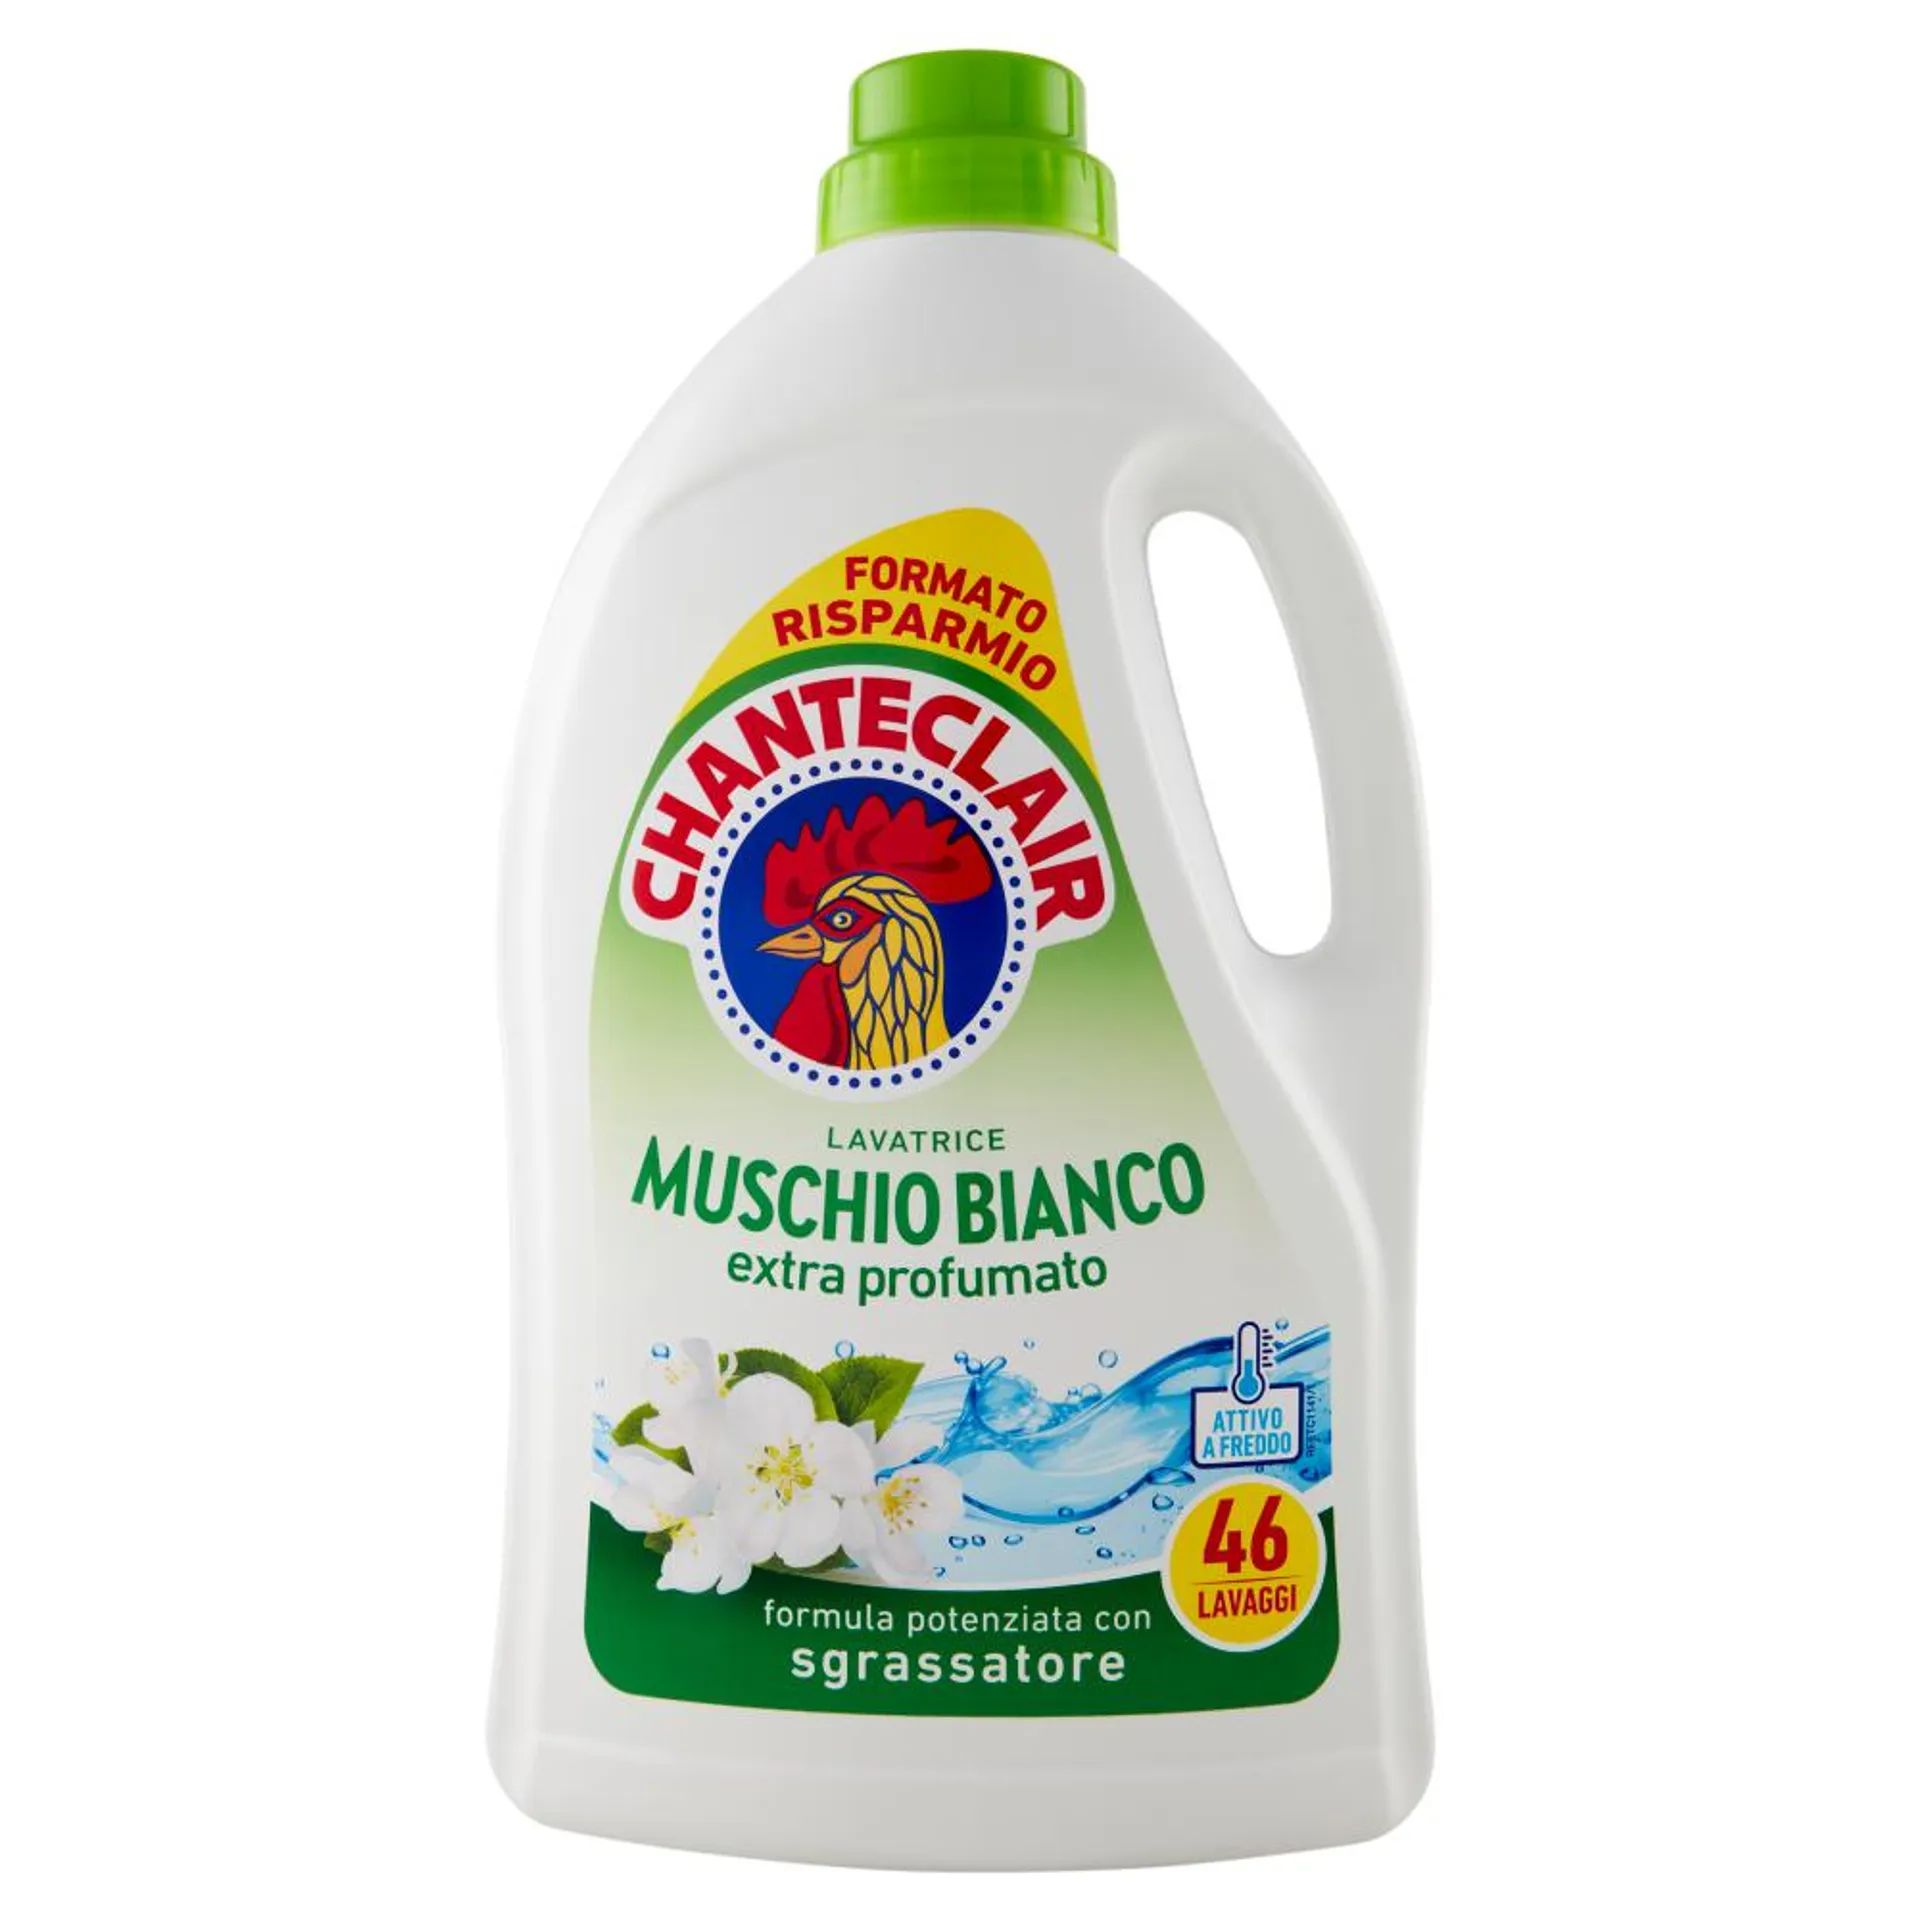 Chanteclair Lavatrice Muschio Bianco 2070 ml